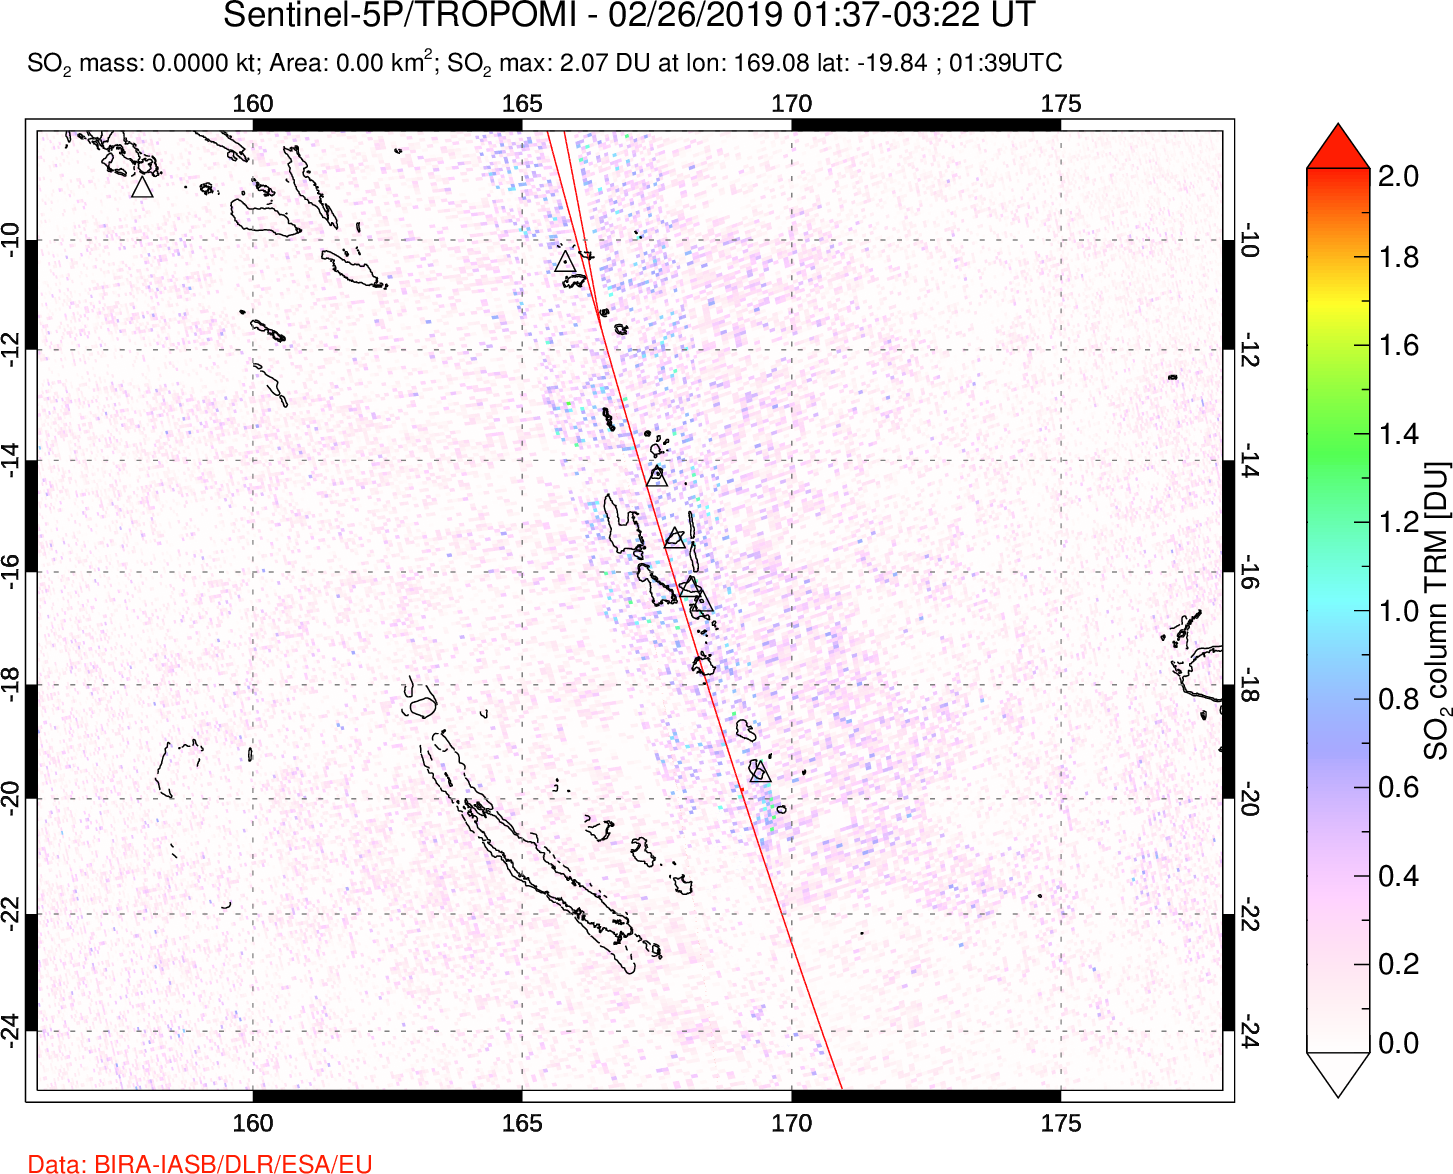 A sulfur dioxide image over Vanuatu, South Pacific on Feb 26, 2019.